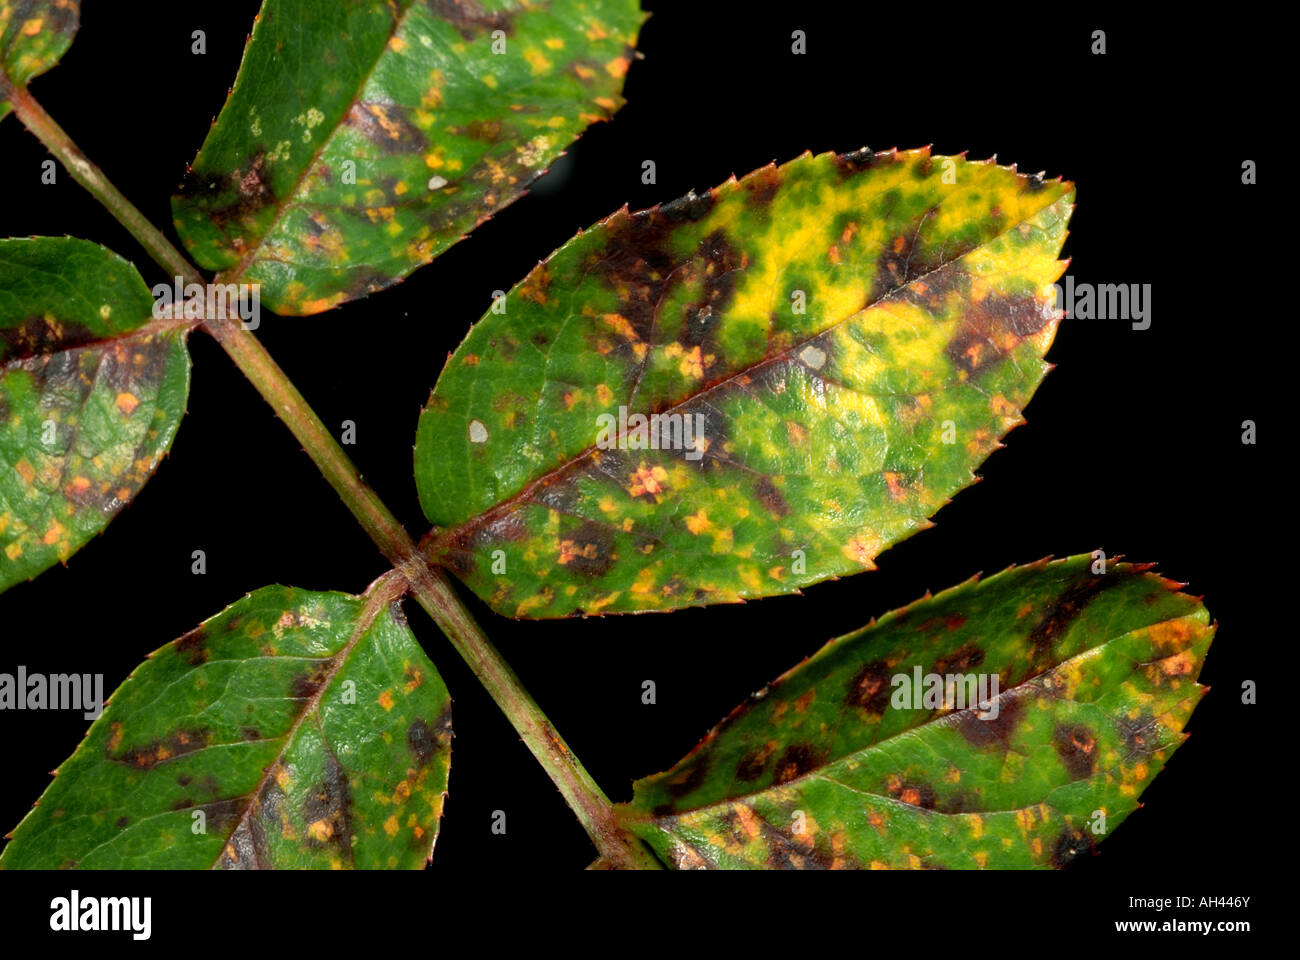 Stieg um Rost Phragmidium Tuberculatum Multi farbige Läsionen am oberen Blattoberfläche Stockfoto